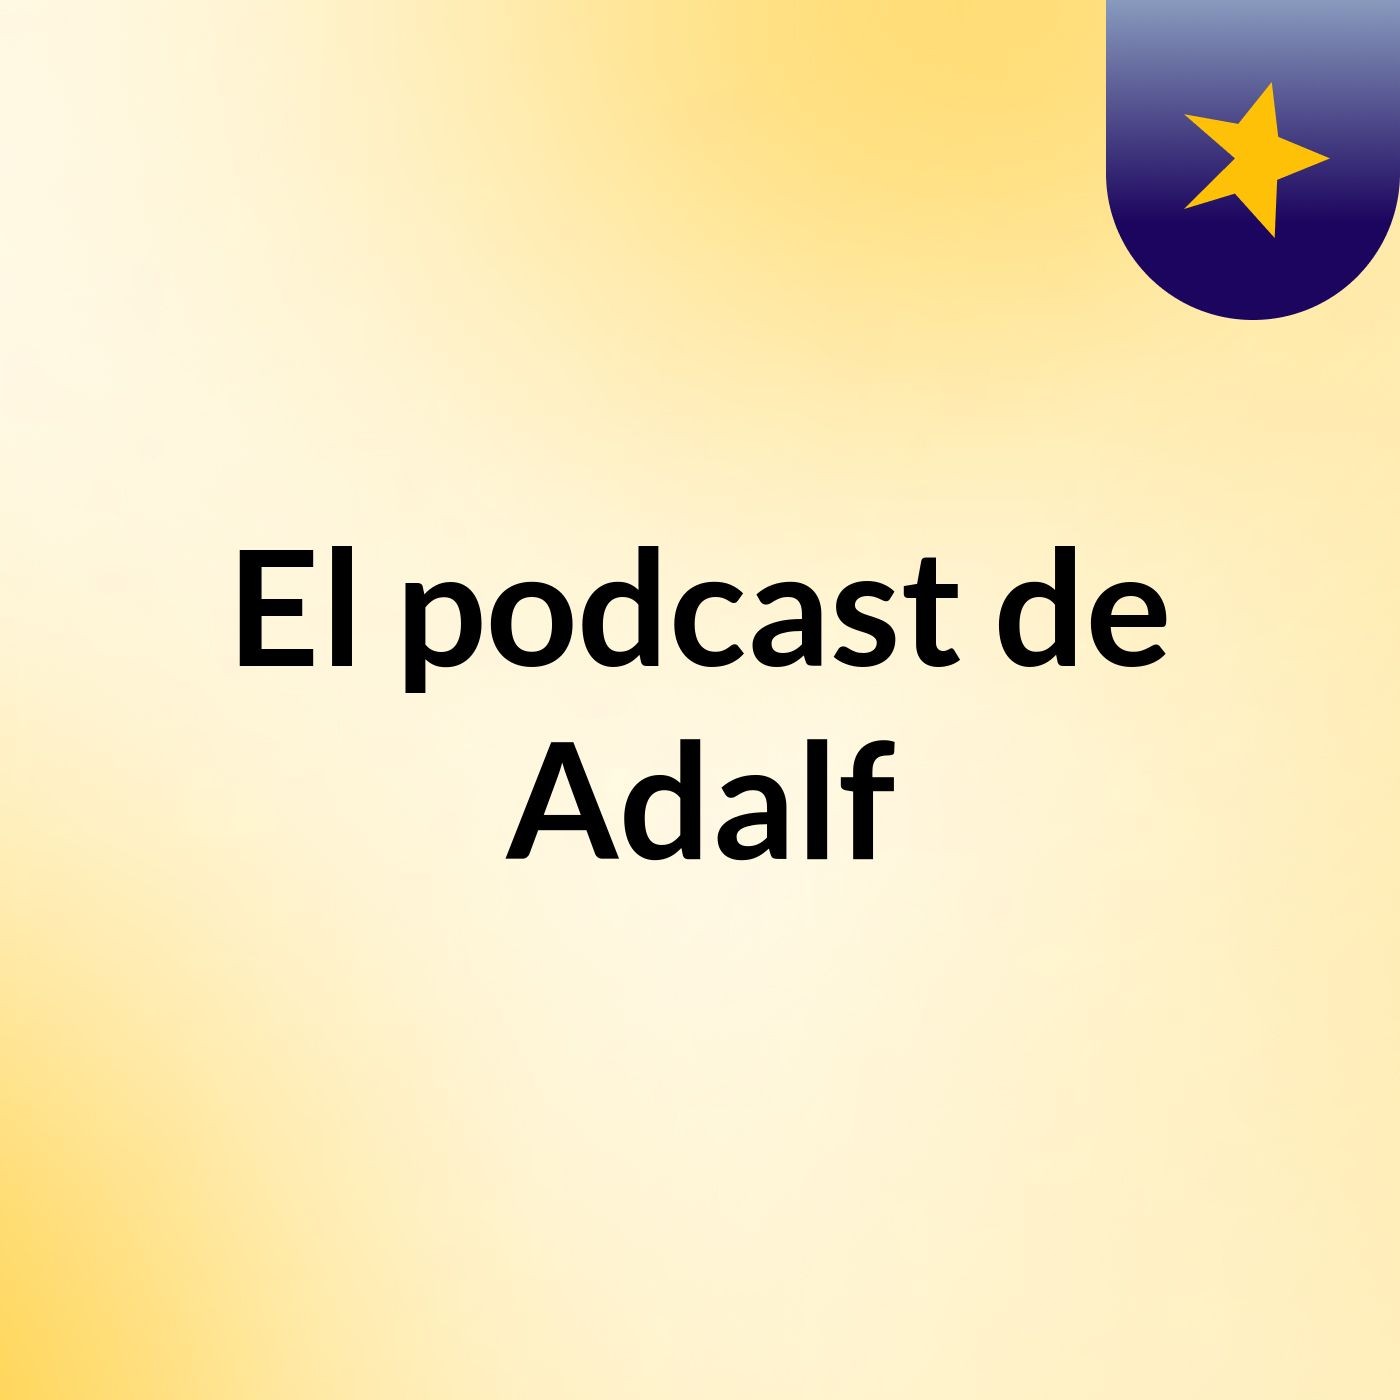 El podcast de Adalf